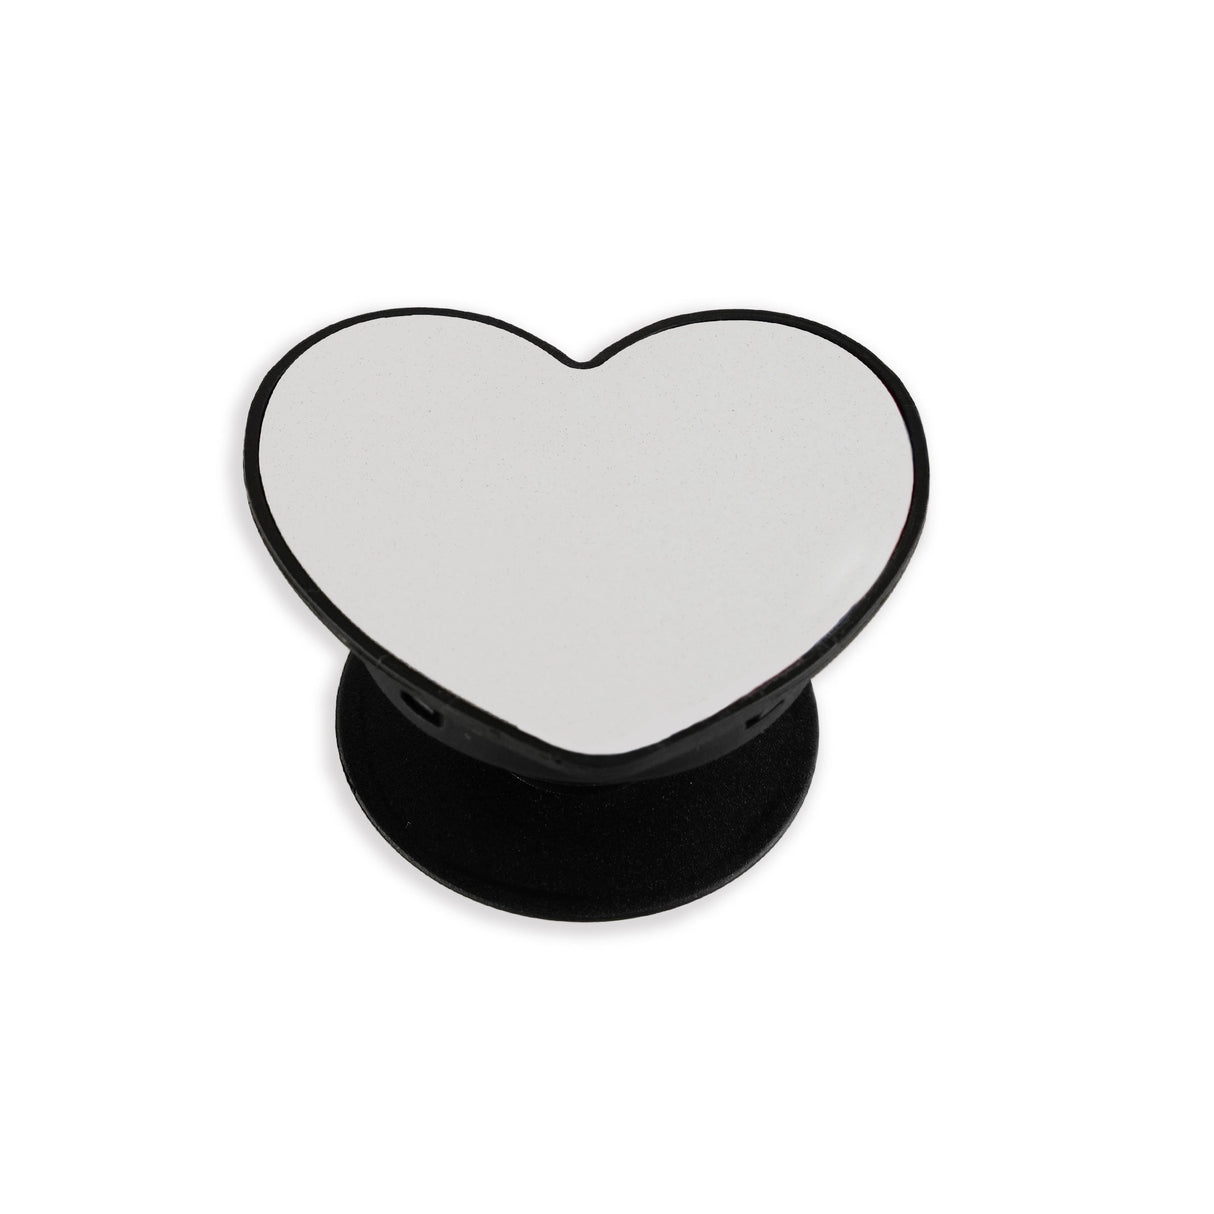 Phone Grip & Aluminum Insert - Black Heart